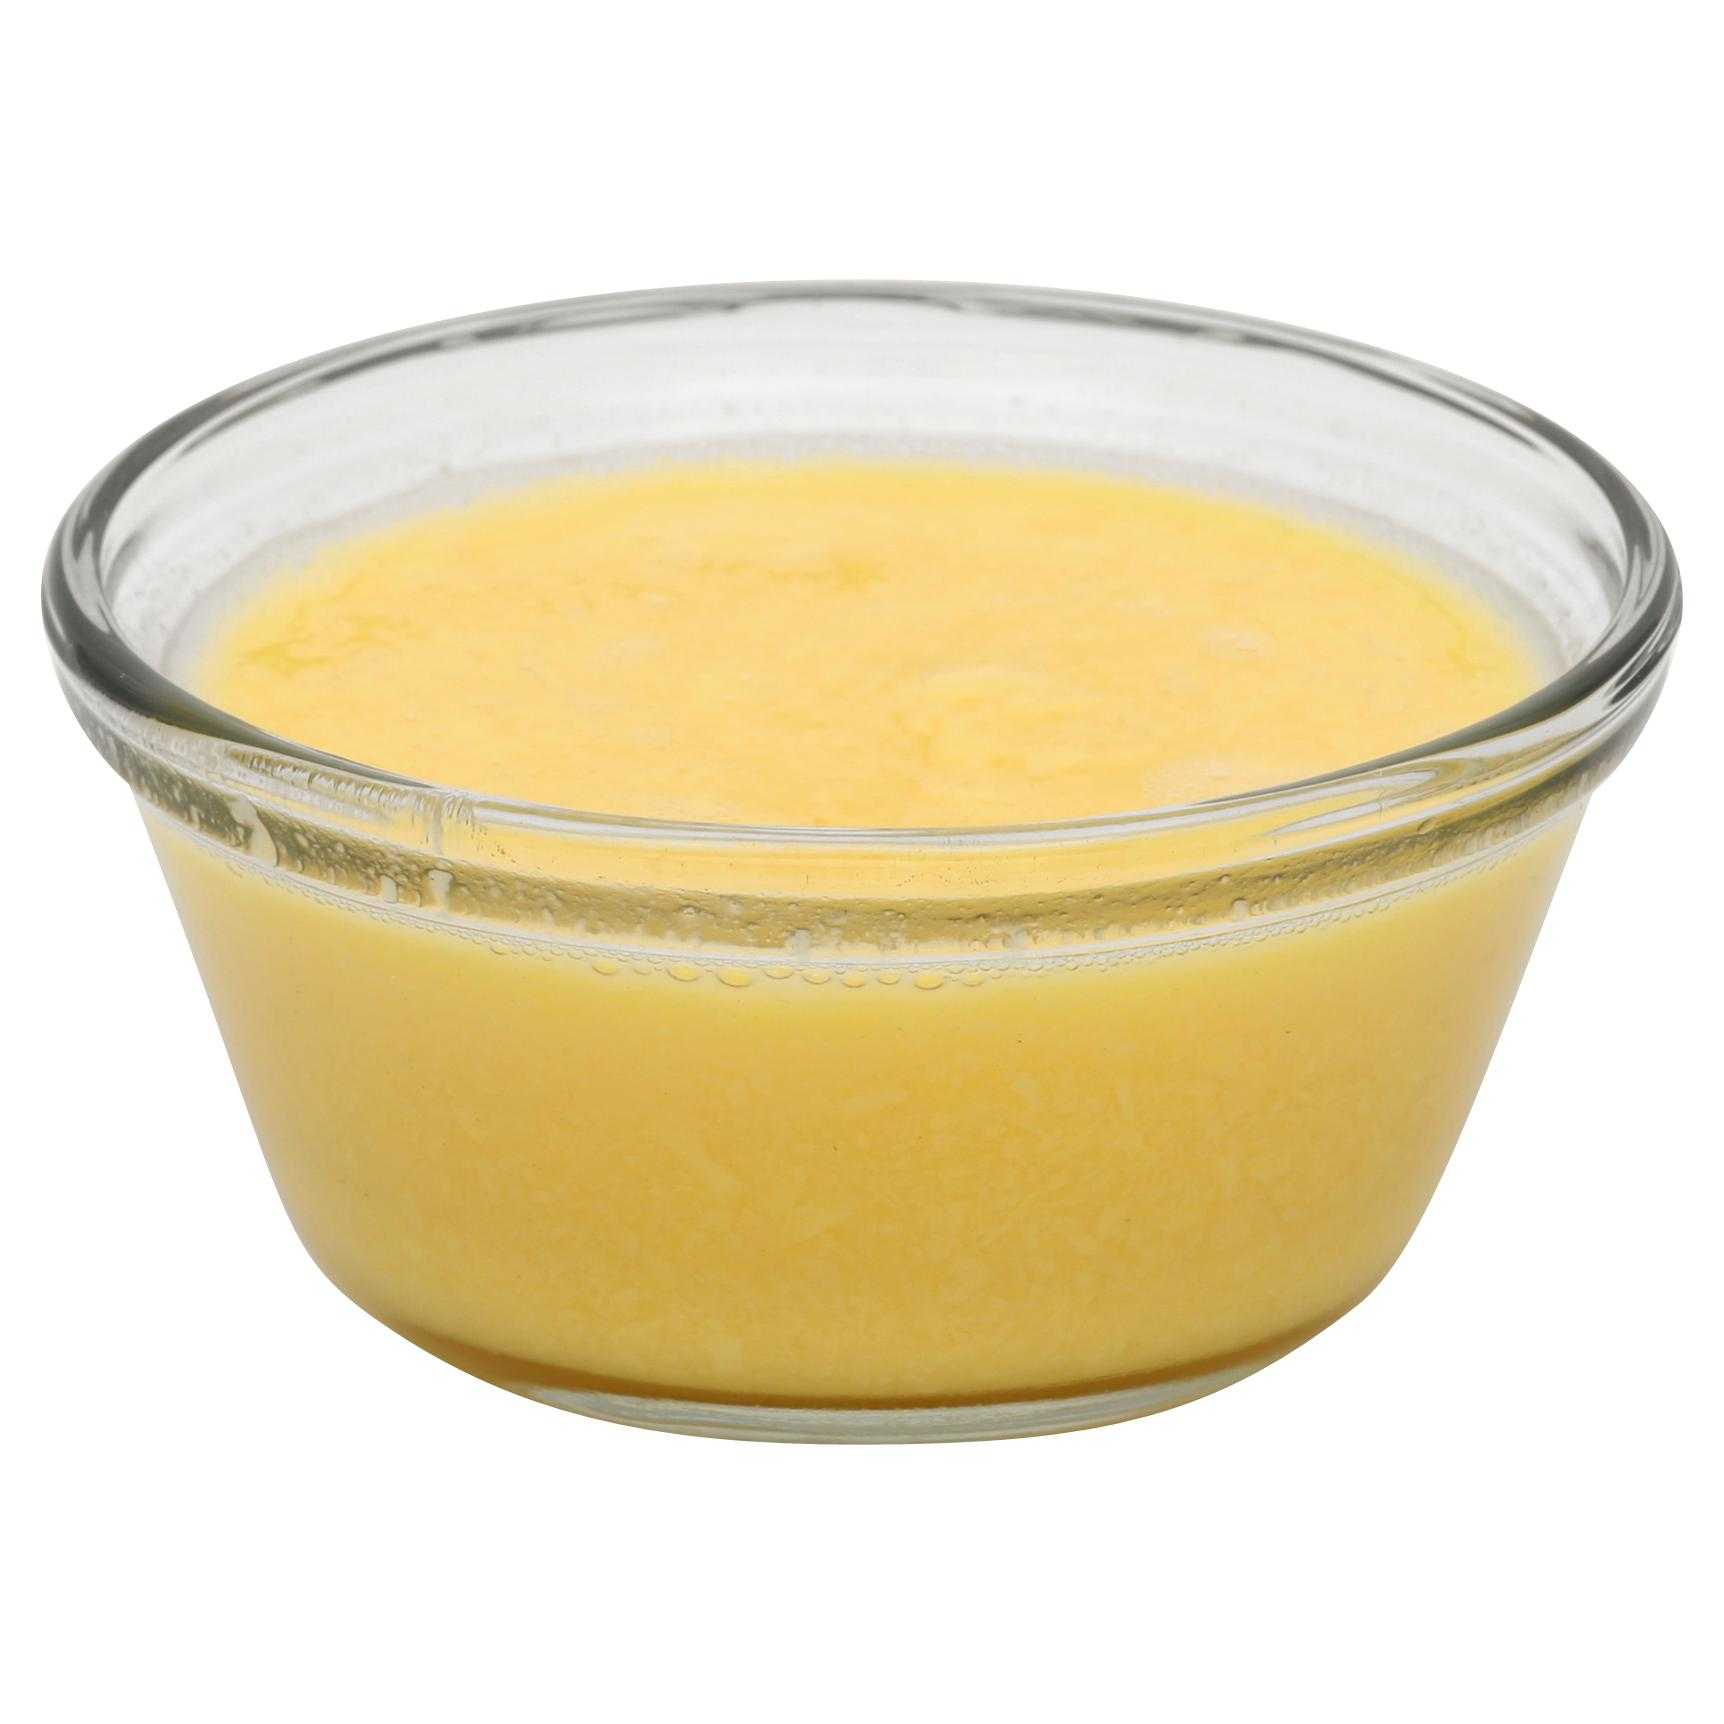 Papetti’s® Frozen Low Fat, No Cholesterol Liquid Egg Substitute, 15/2 Lb Cartons